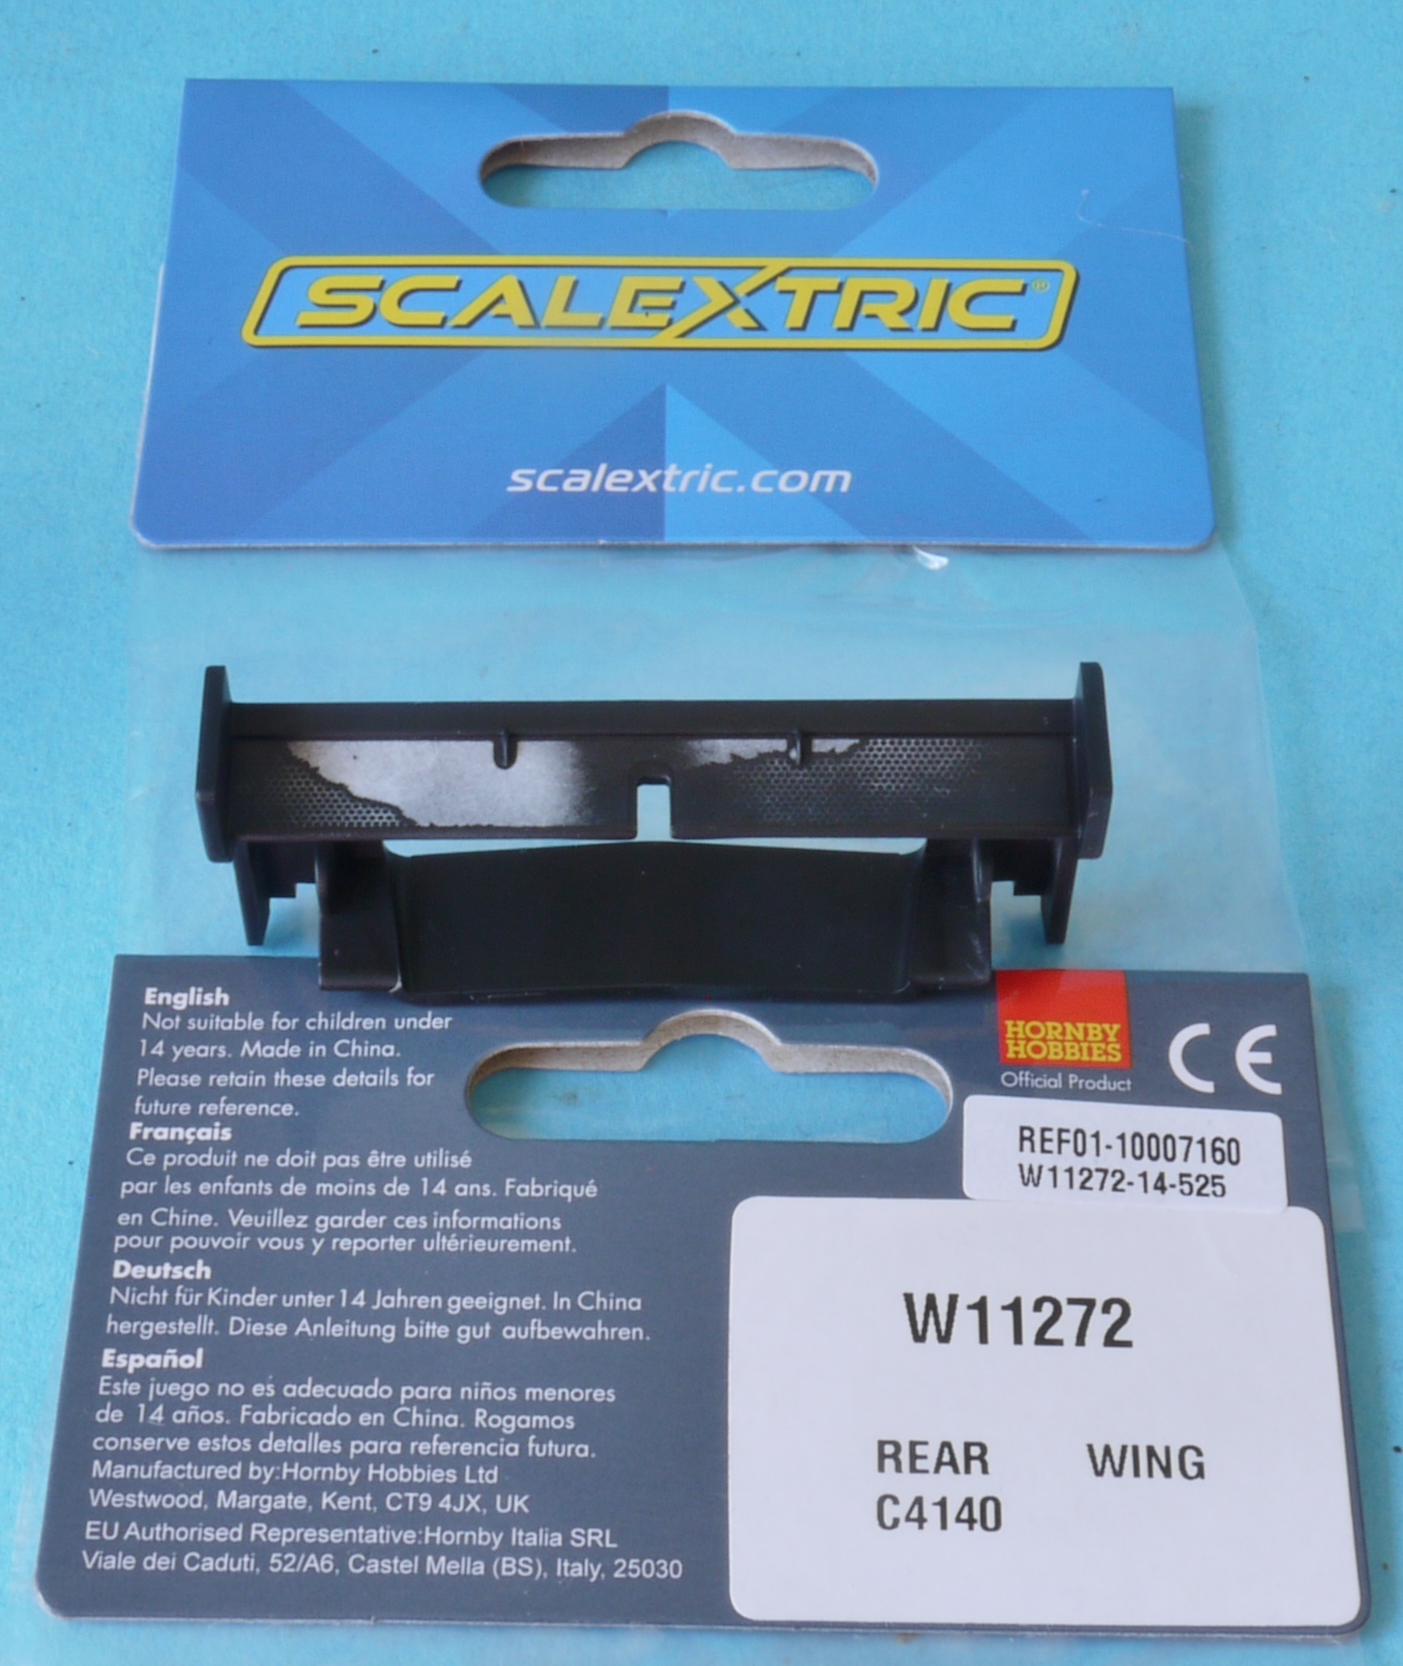 W11272 Scalextric Spare Black Rear Wing for Batman Car C4140 - AC Models  Spares M Ltd